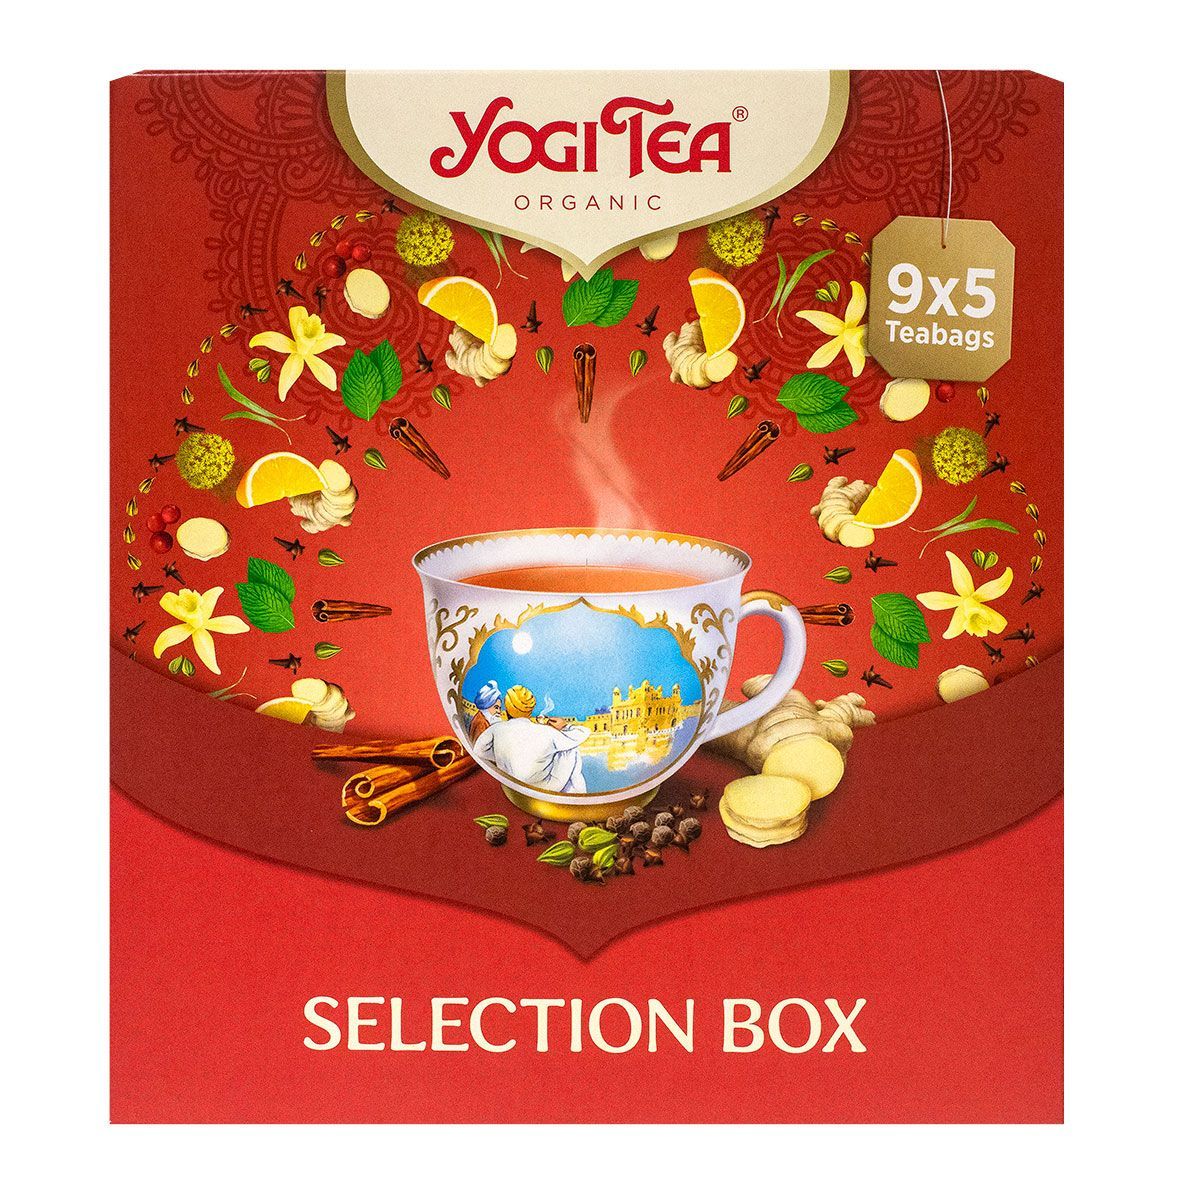 Yogi Tea selection box : coffret infusions ayurvédiques